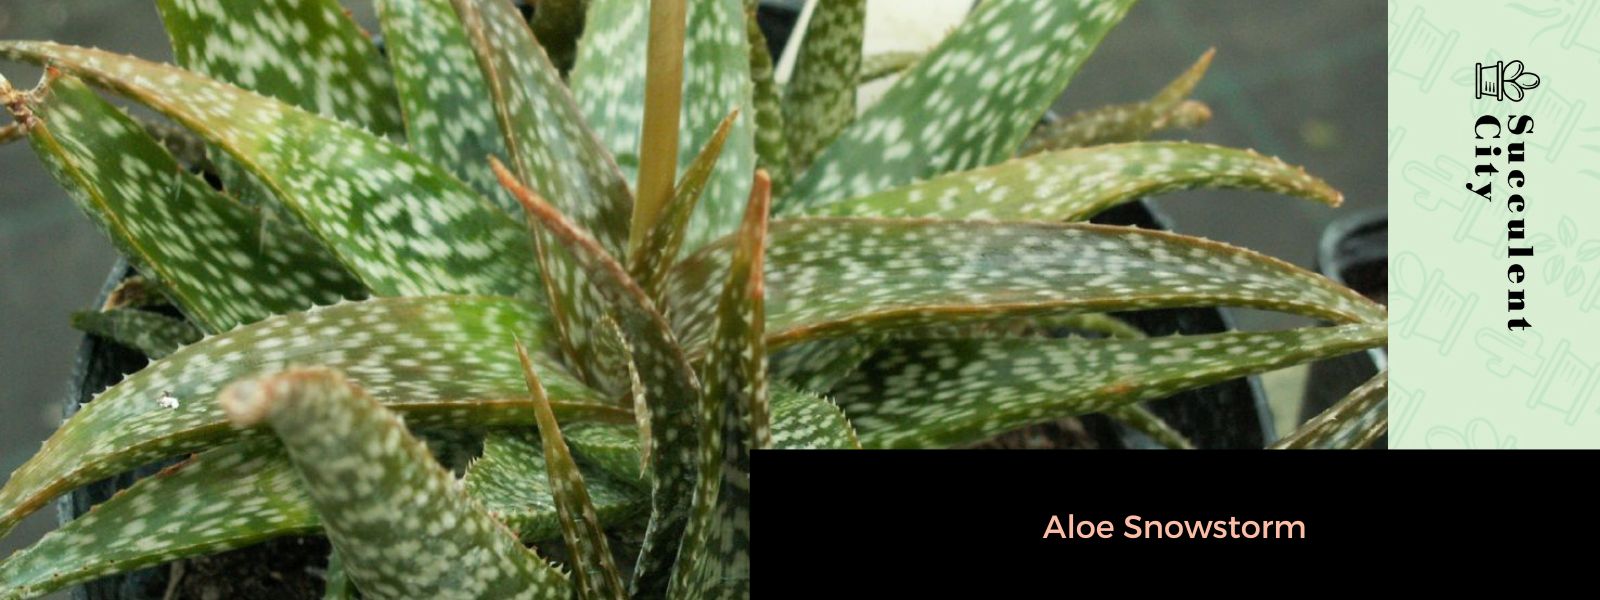 La rara planta de aloe “Aloe Snowstorm”